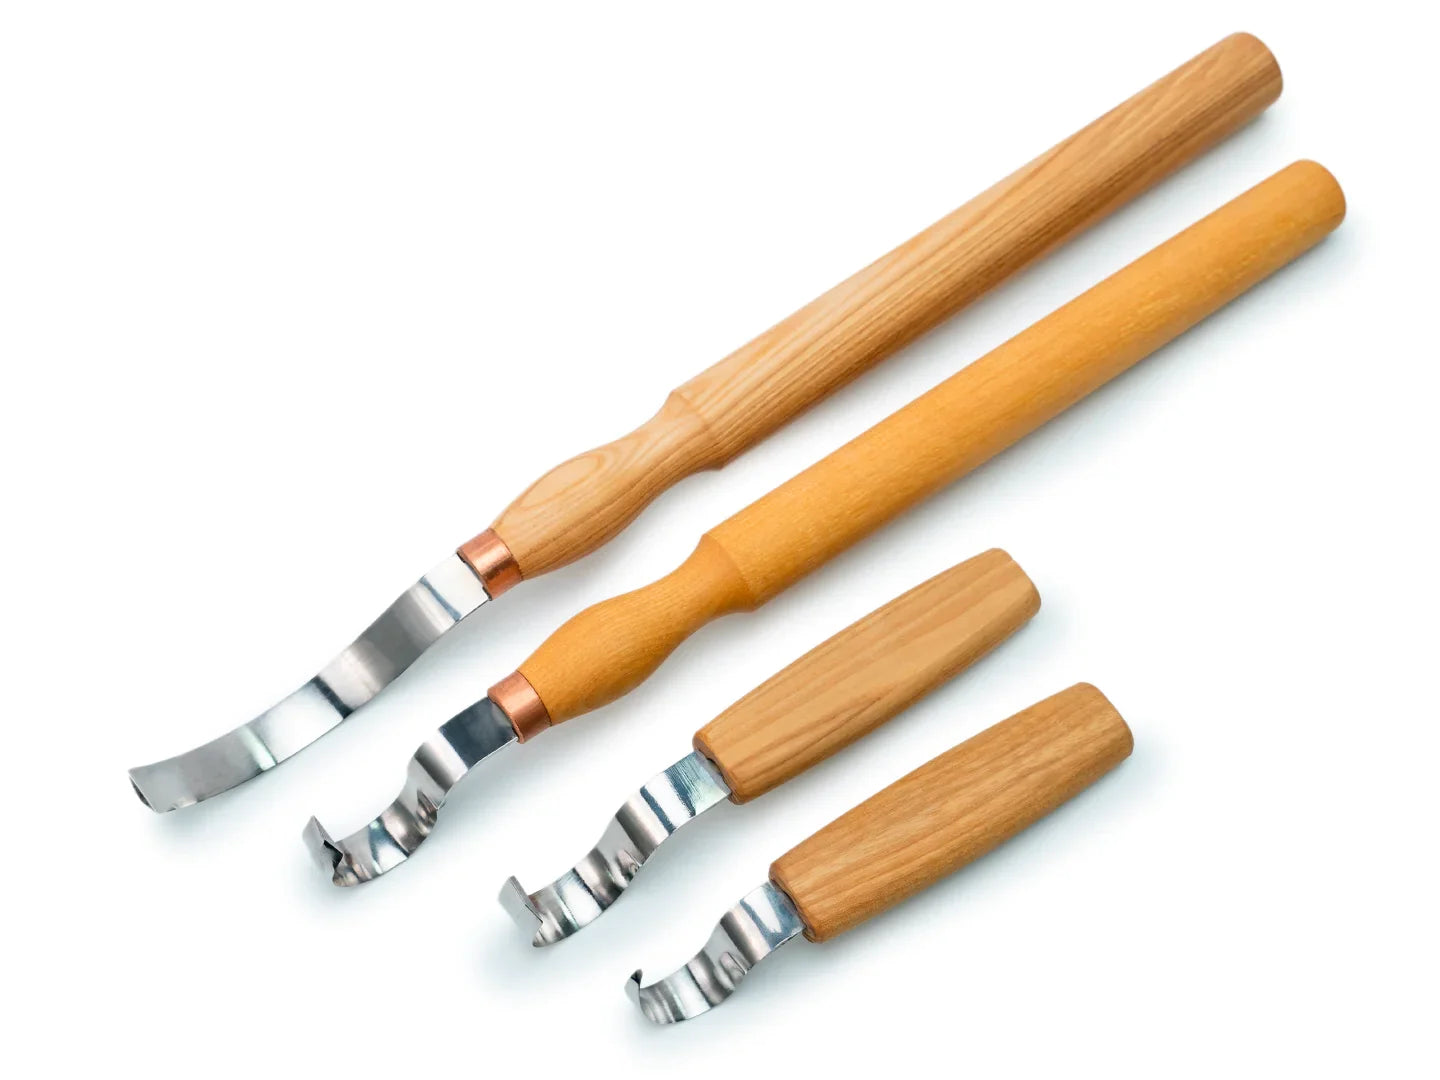 BeaverCraft S11 Wood Carving Hook Knife Tool Set of 4 Tools